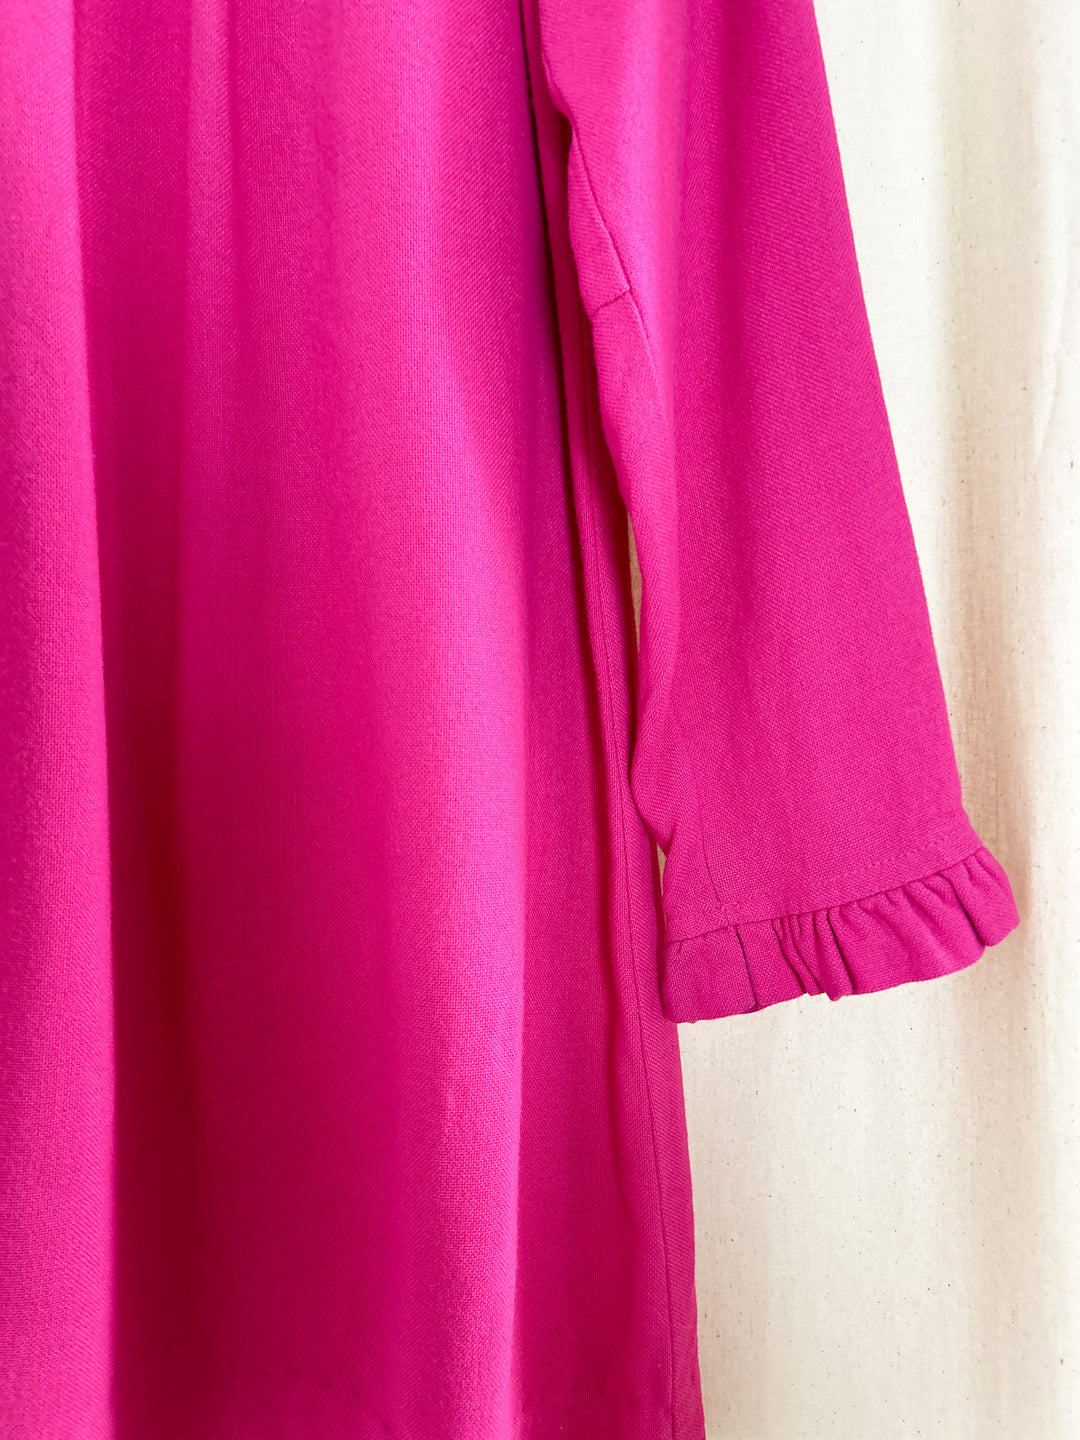 Bobbie fuchsia pink 60s smock blouse